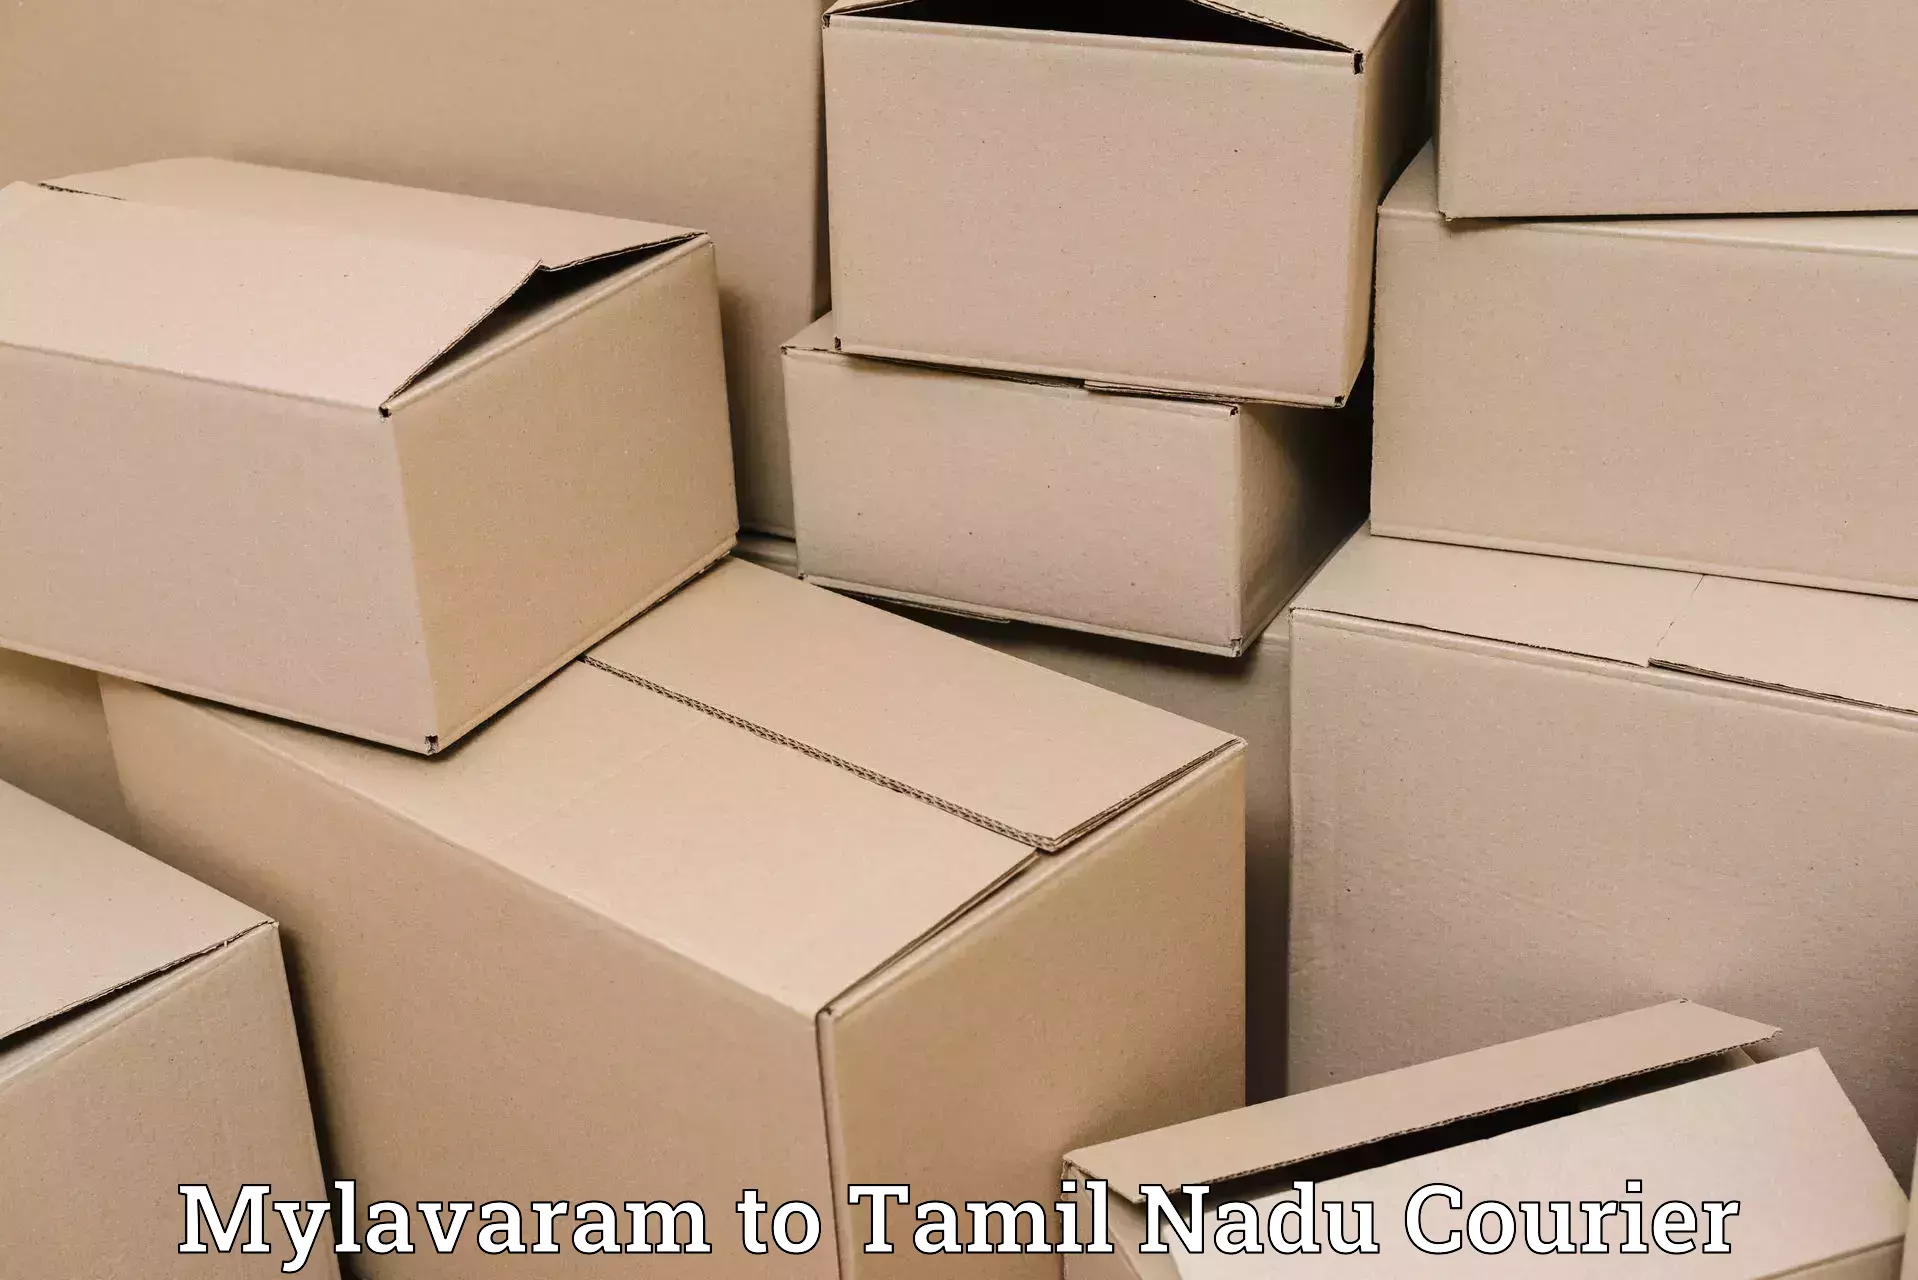 Sustainable delivery practices Mylavaram to Sriperumbudur